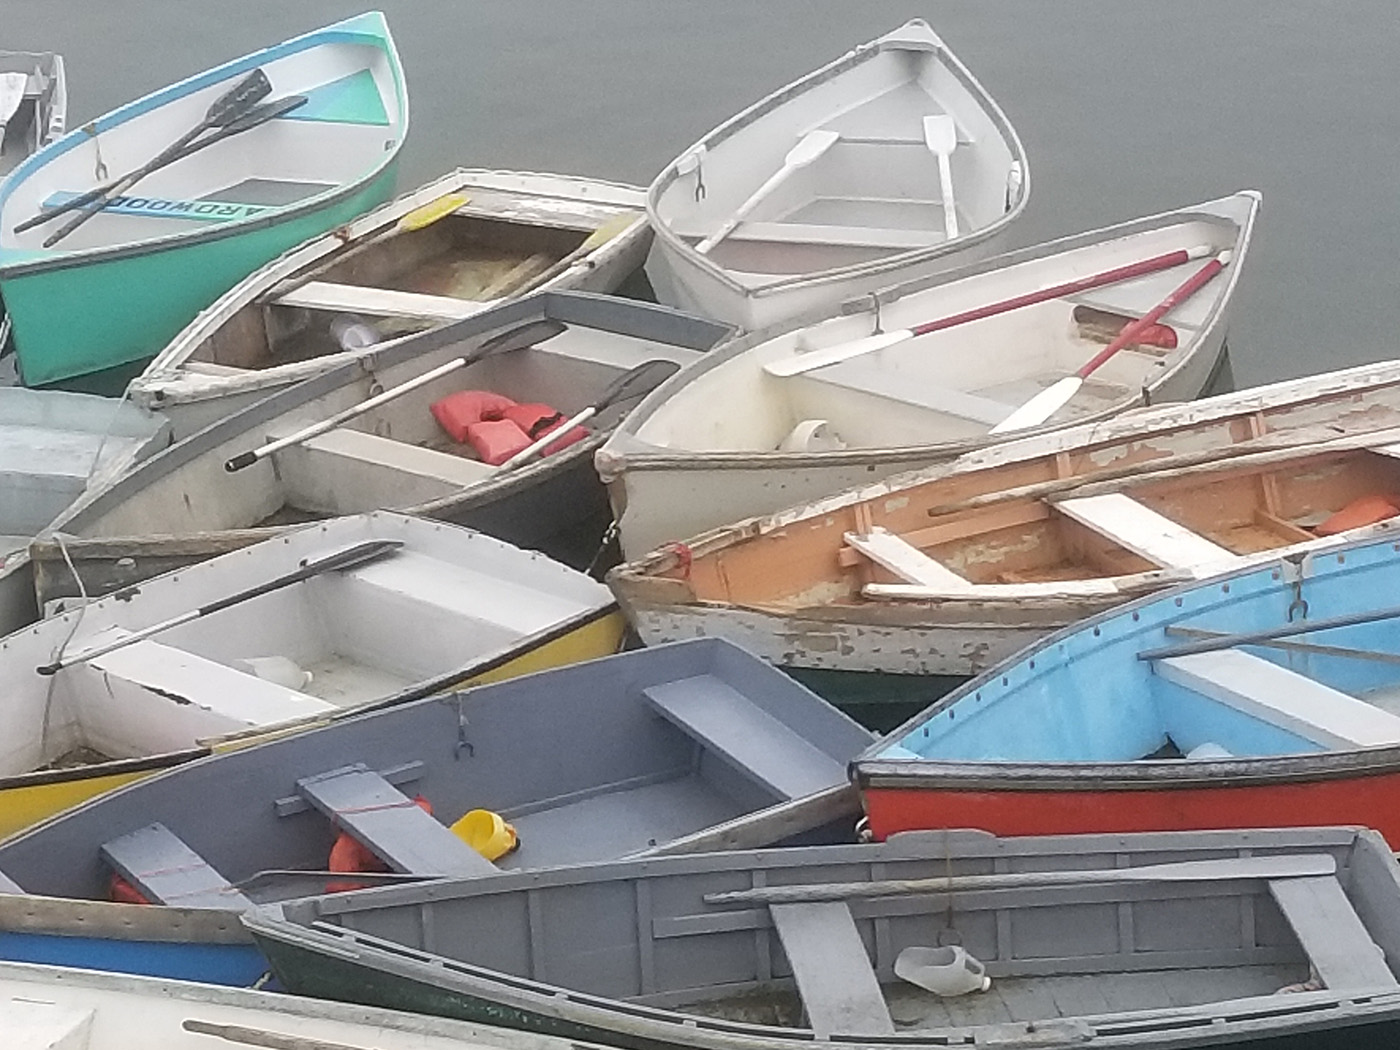 Schoodic skiffs at rest, Winter Harbor, by Penny Walls